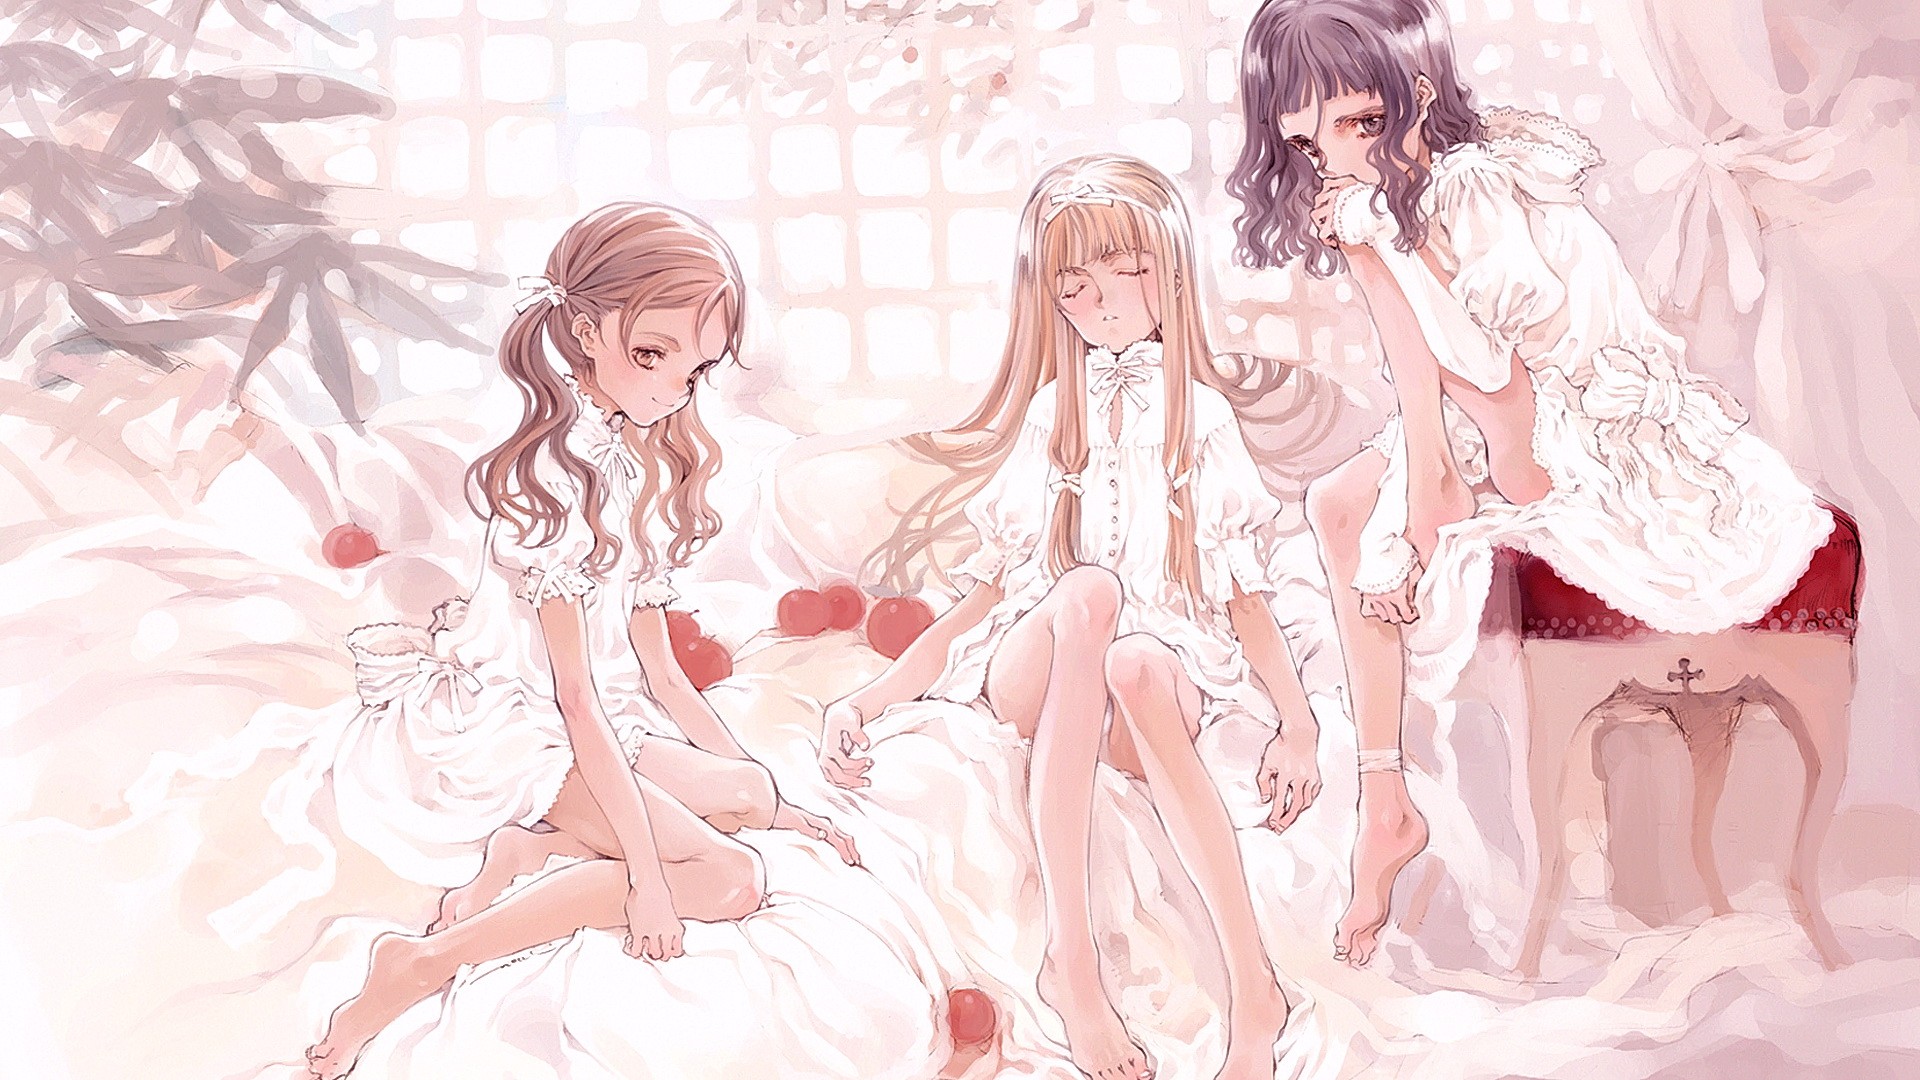 Anime 1920x1080 anime anime girls brunette blonde long hair smiling looking at viewer Oyari Ashito women trio legs sitting closed eyes group of women